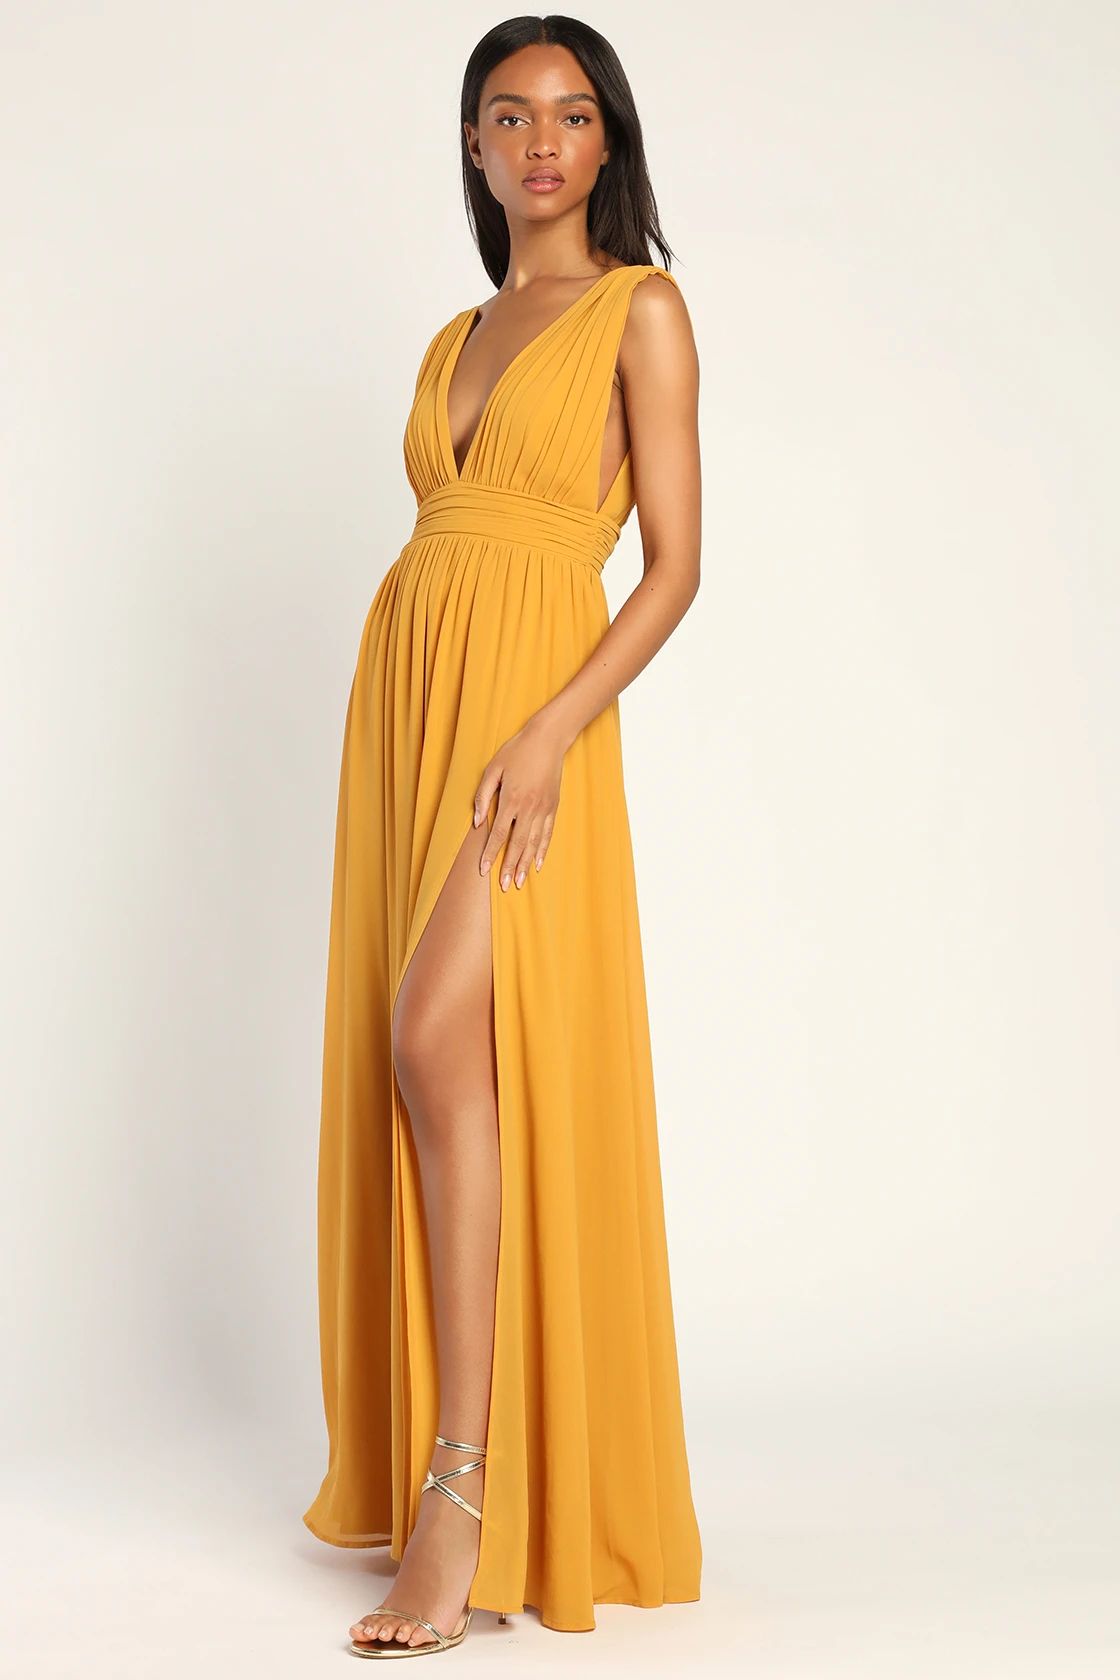 Heavenly Hues Marigold Yellow Maxi Dress | Lulus (US)